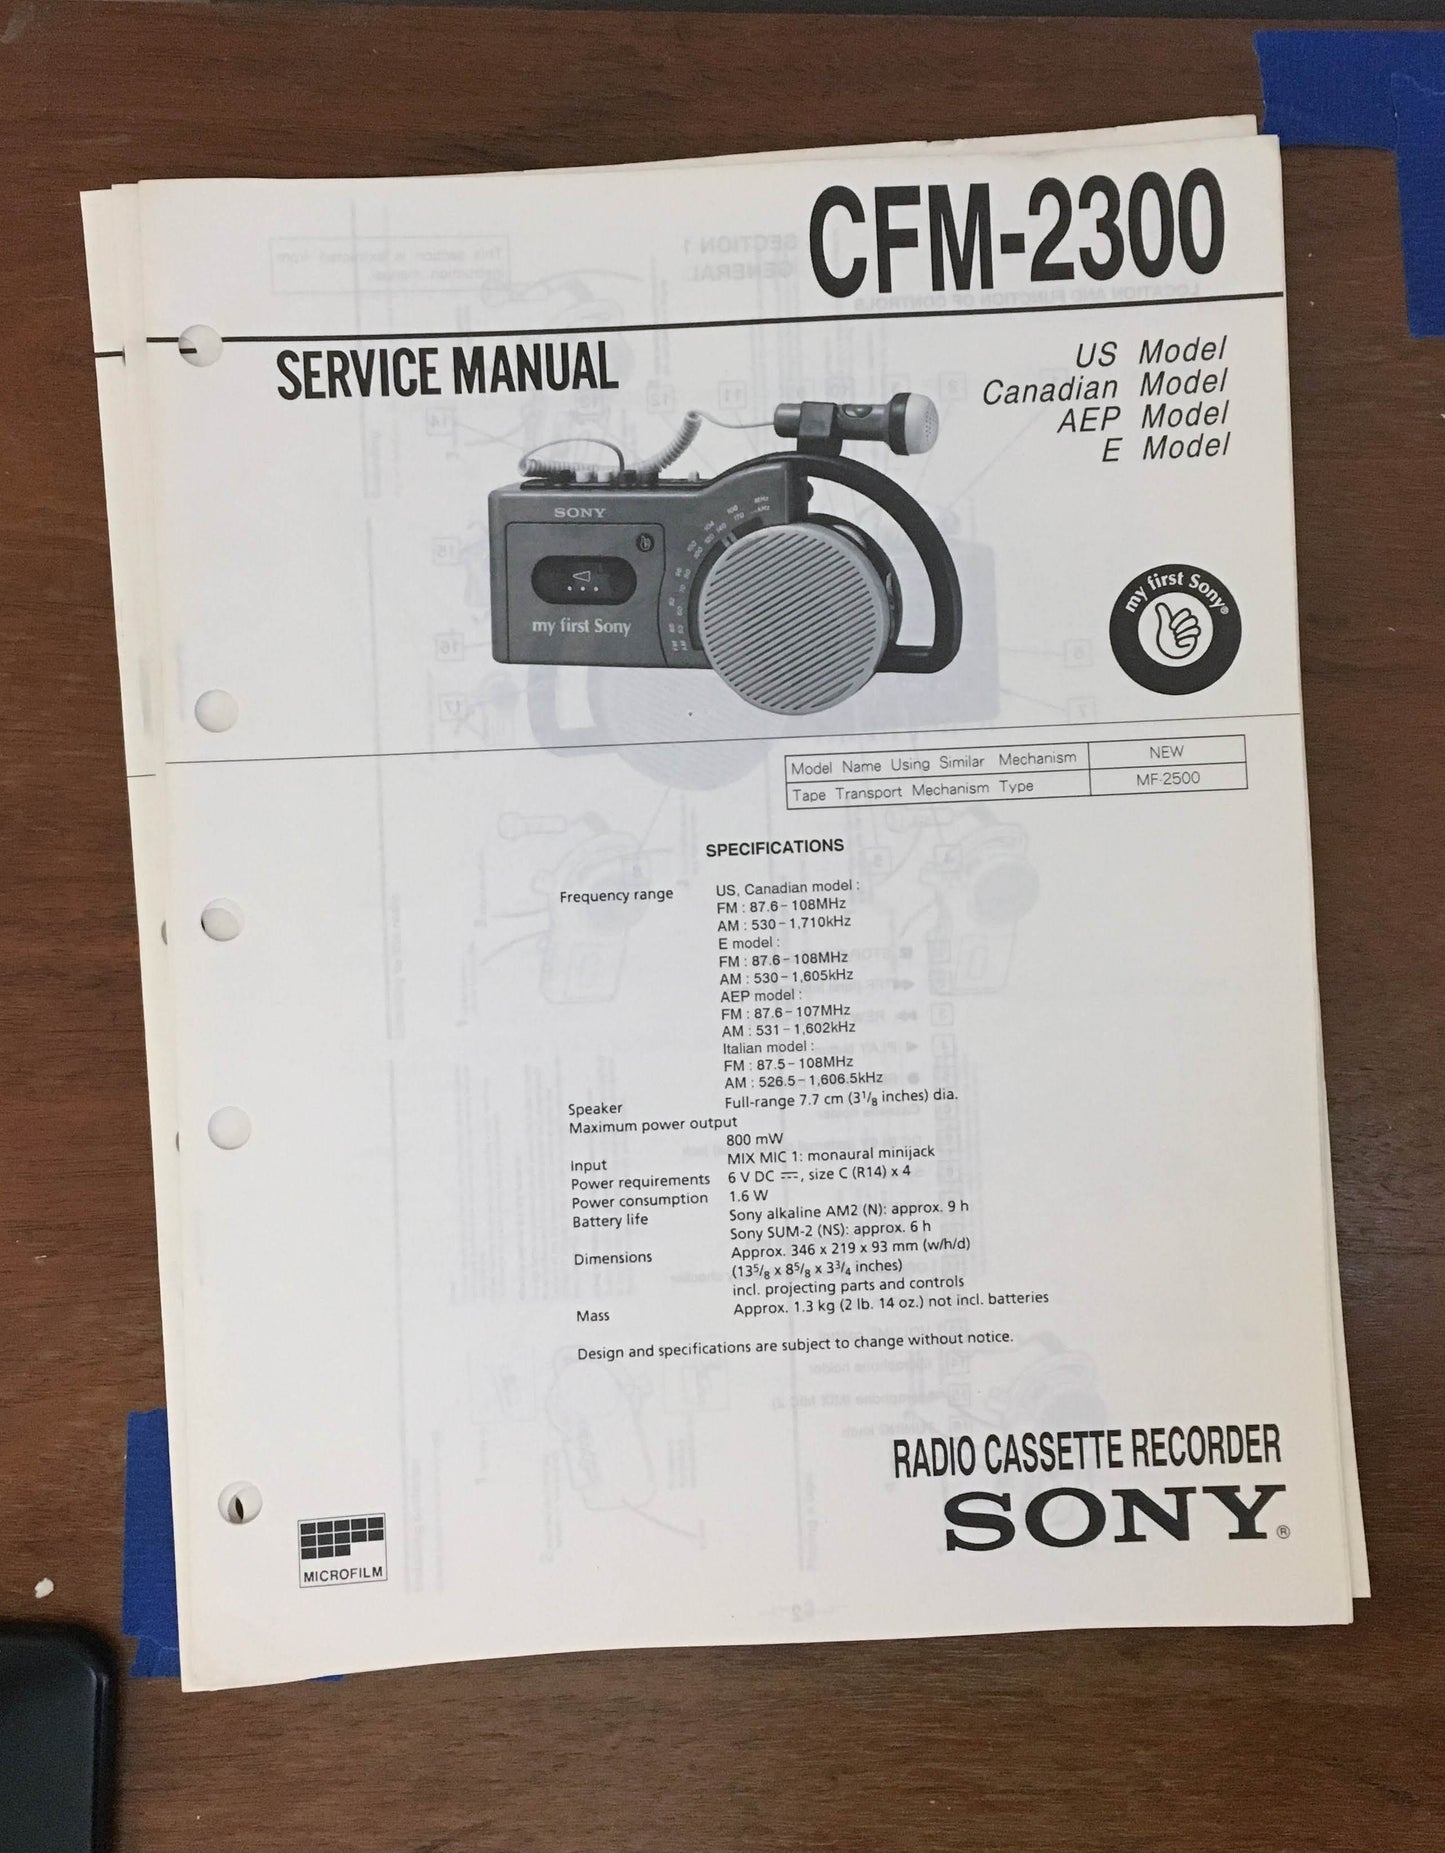 Sony CFM-2300 Radio Cassette Recorder Service Manual *Original*